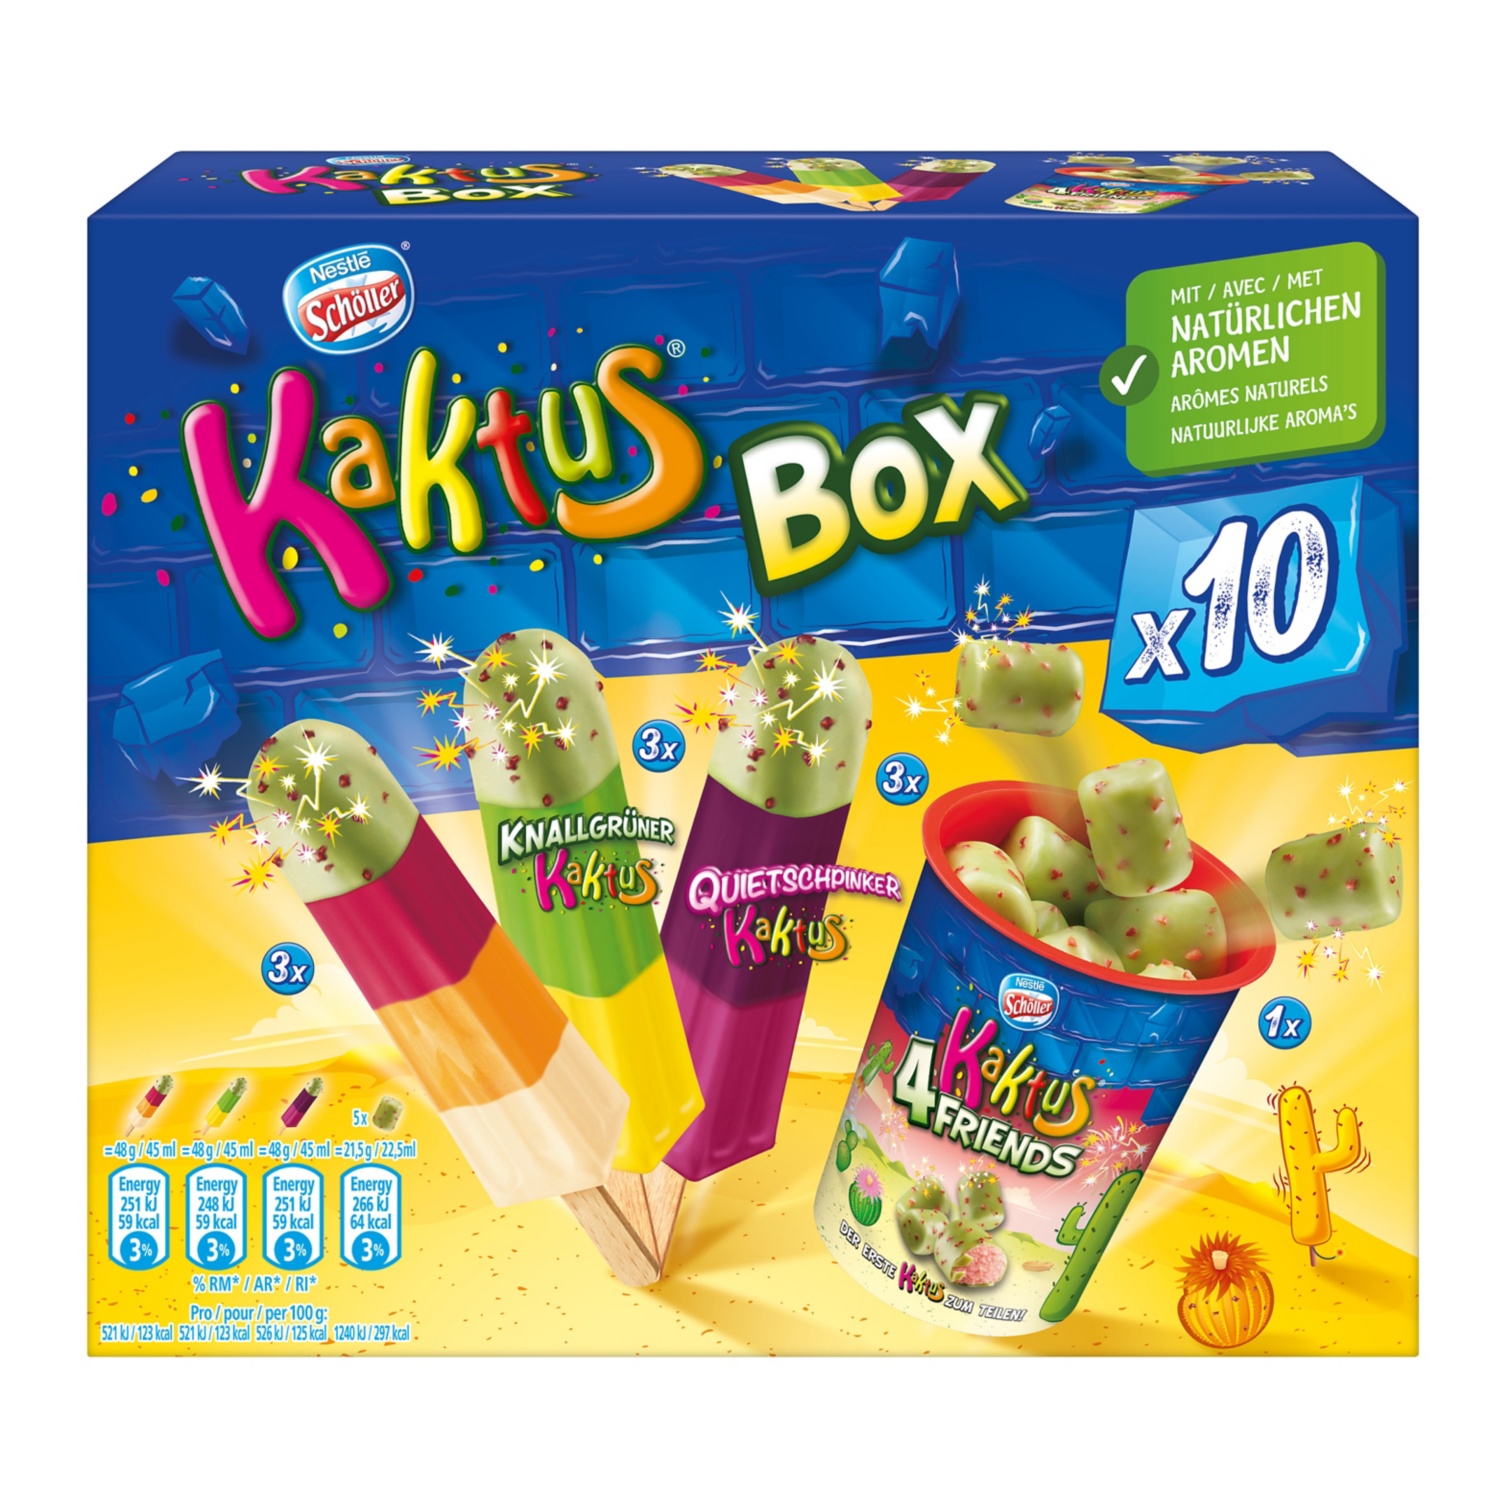 Nestlé/Schöller Kaktus Box 495ml